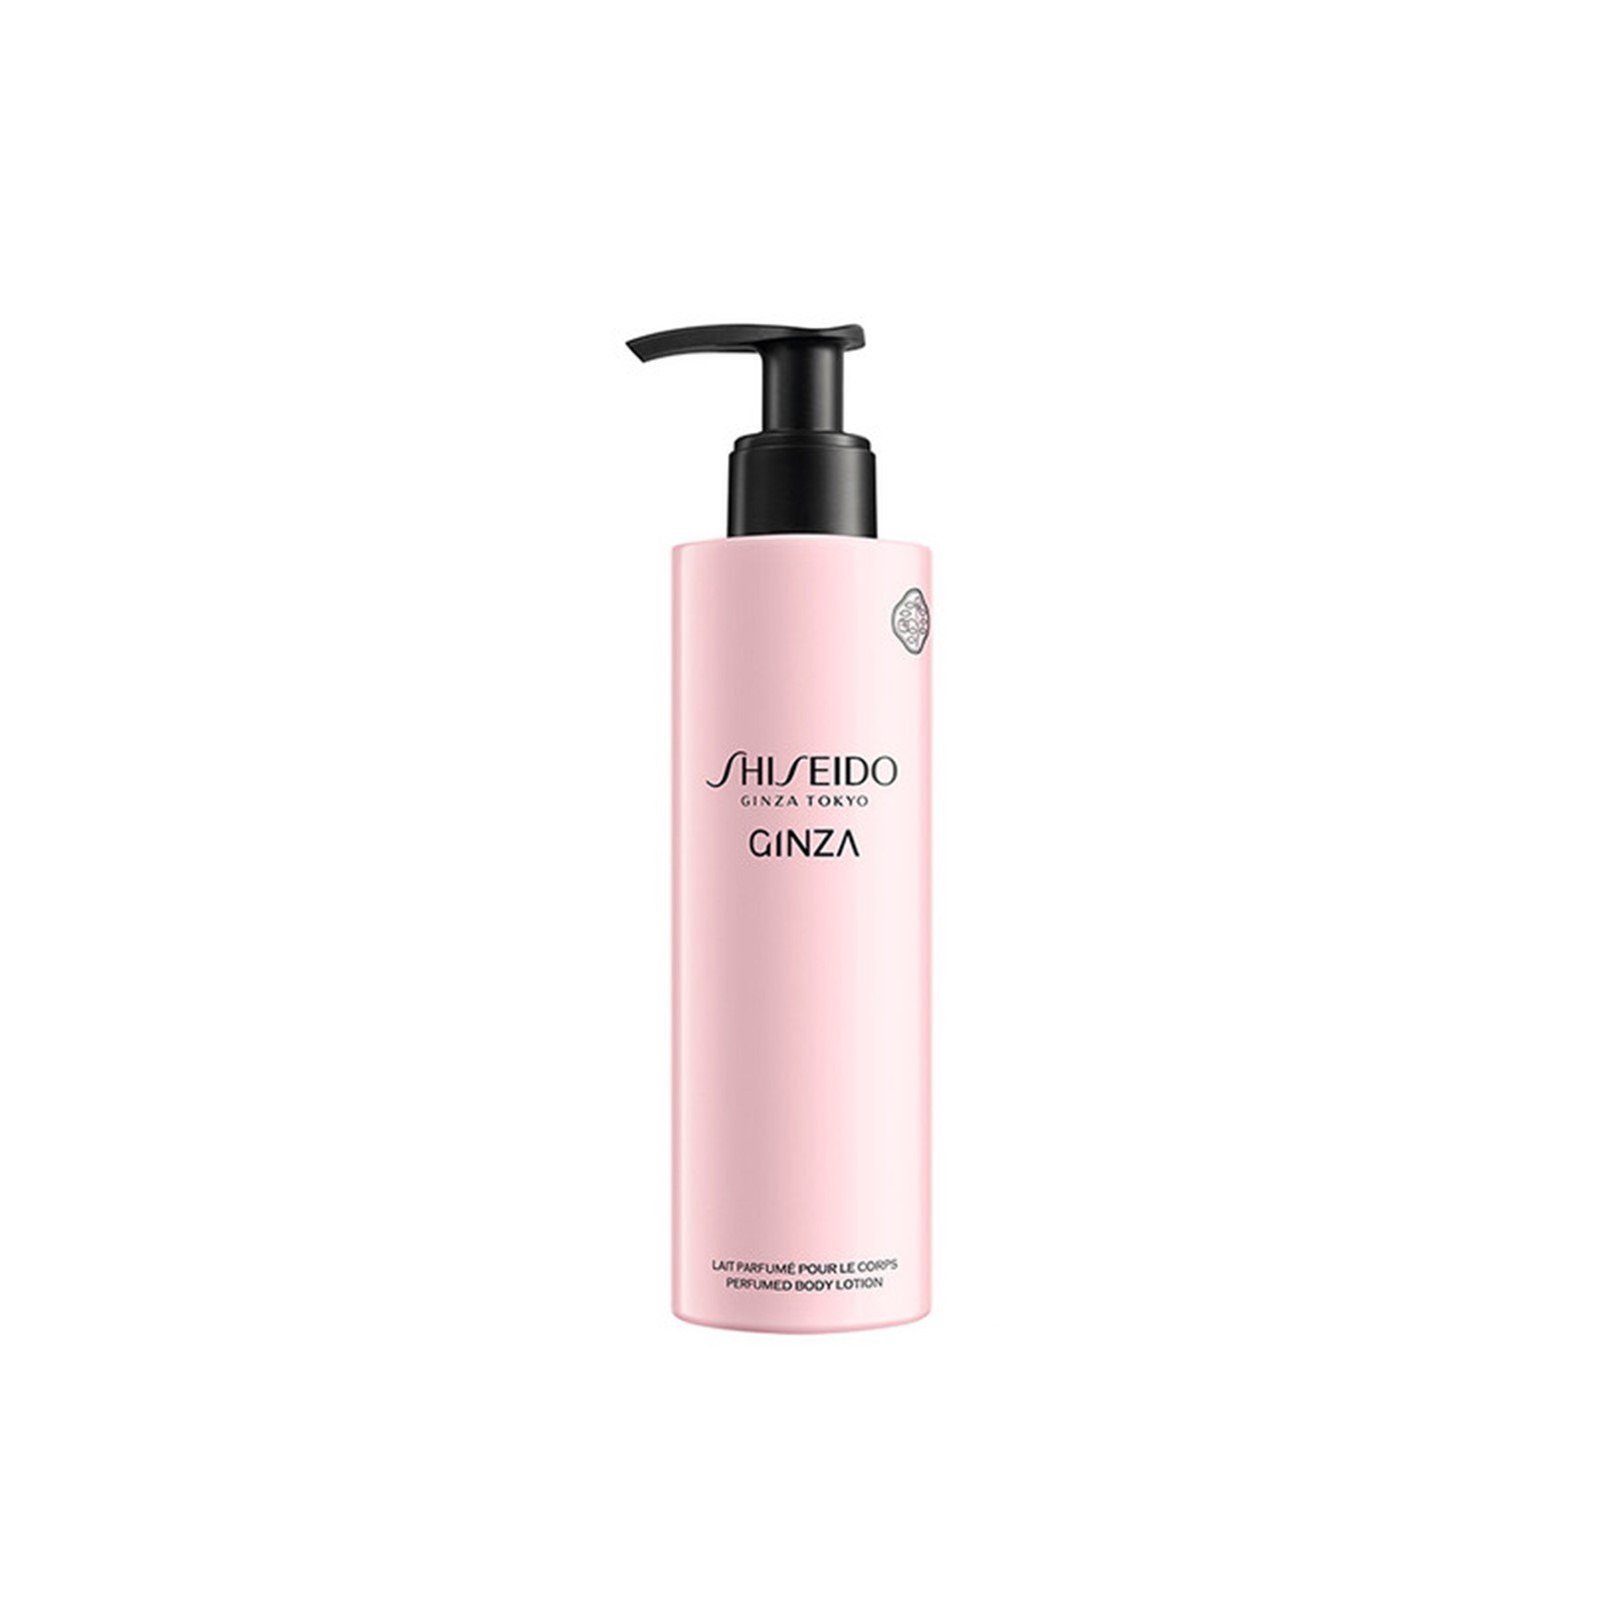 Shiseido Ginza Perfumed Body Lotion 200ml (6.7floz)